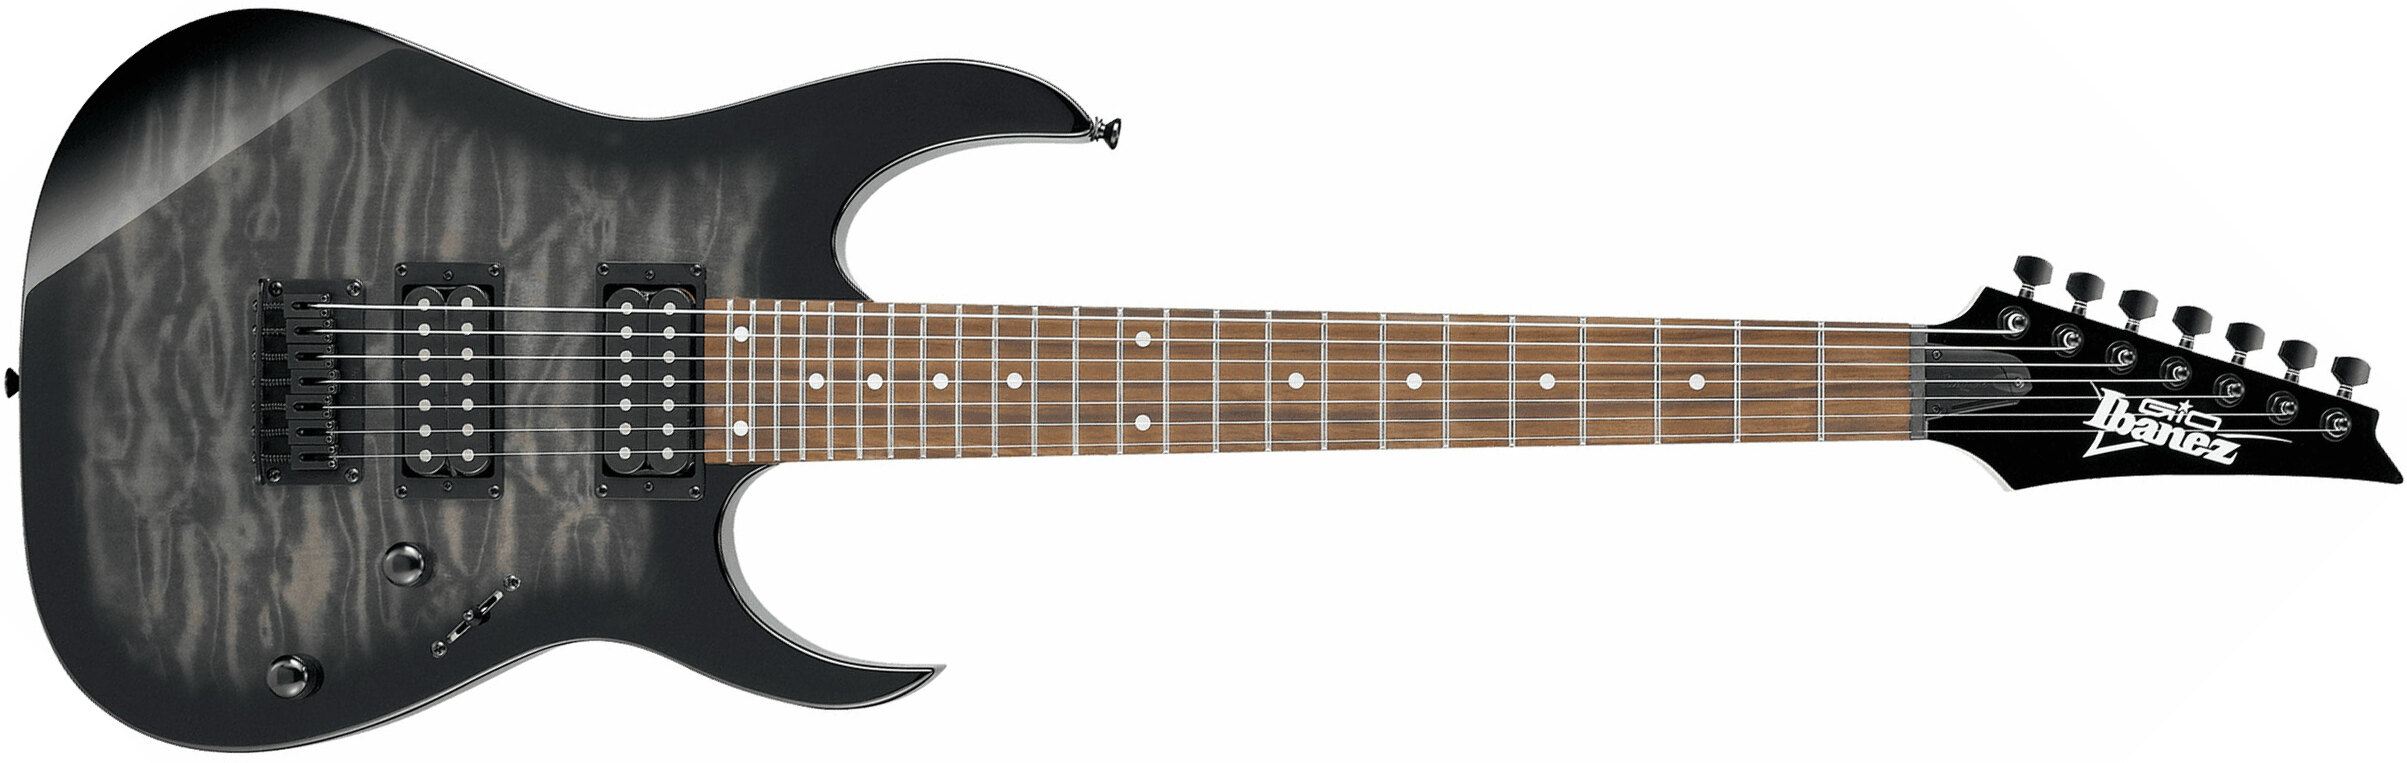 Ibanez Grg7221qa Tks Standard Hh Ht Nzp - Trans Black Sunburst - 7 string electric guitar - Main picture